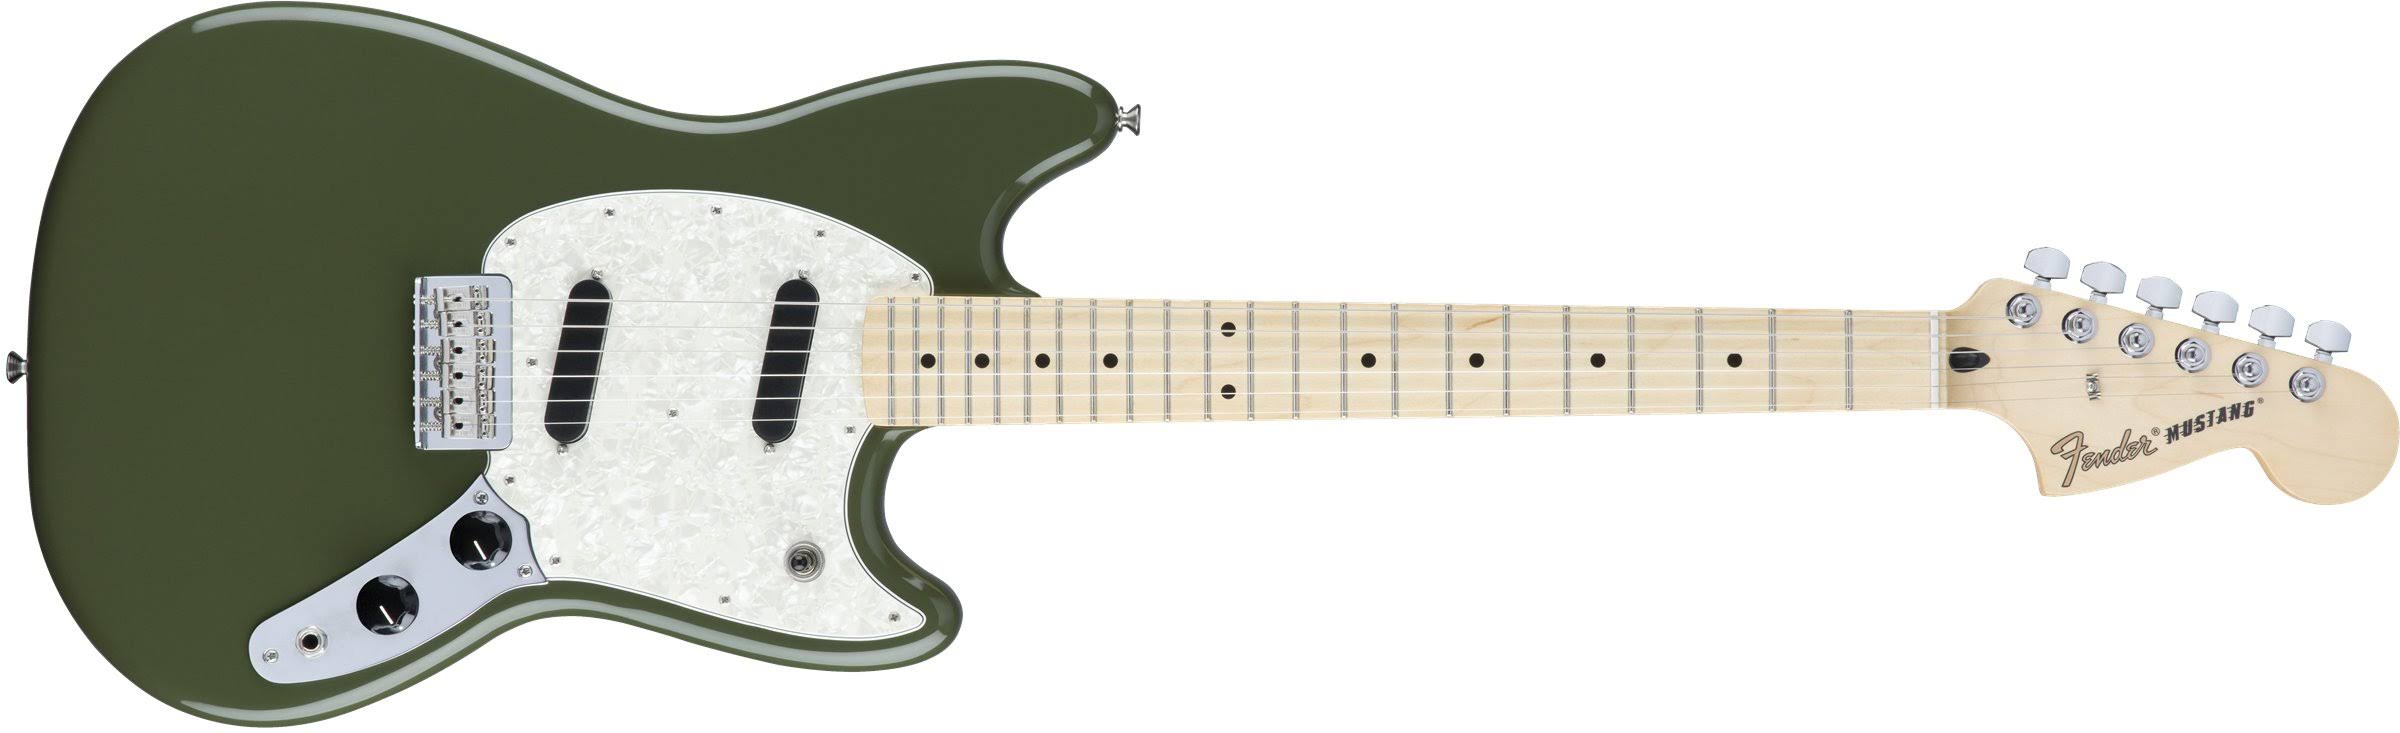 Fender Mustang Electric Guitar - Olive